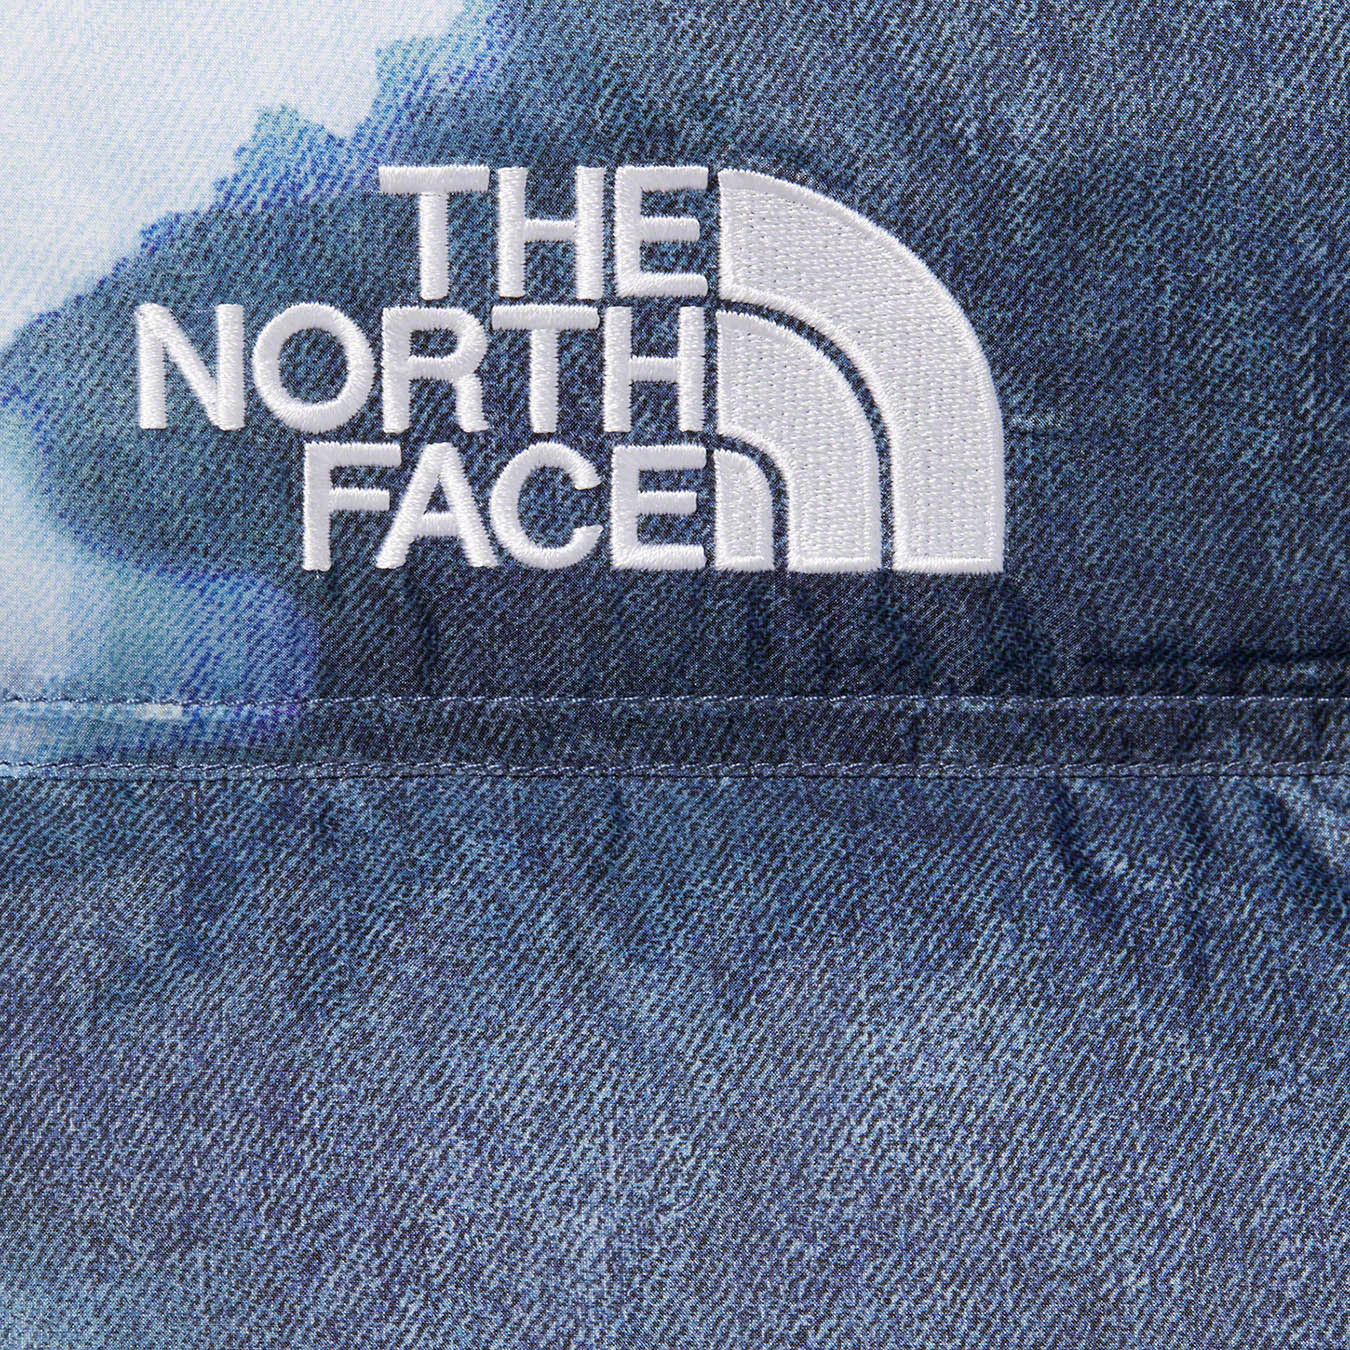 Supreme®/The North Face® Bleached Denim Print Nuptse Jacket